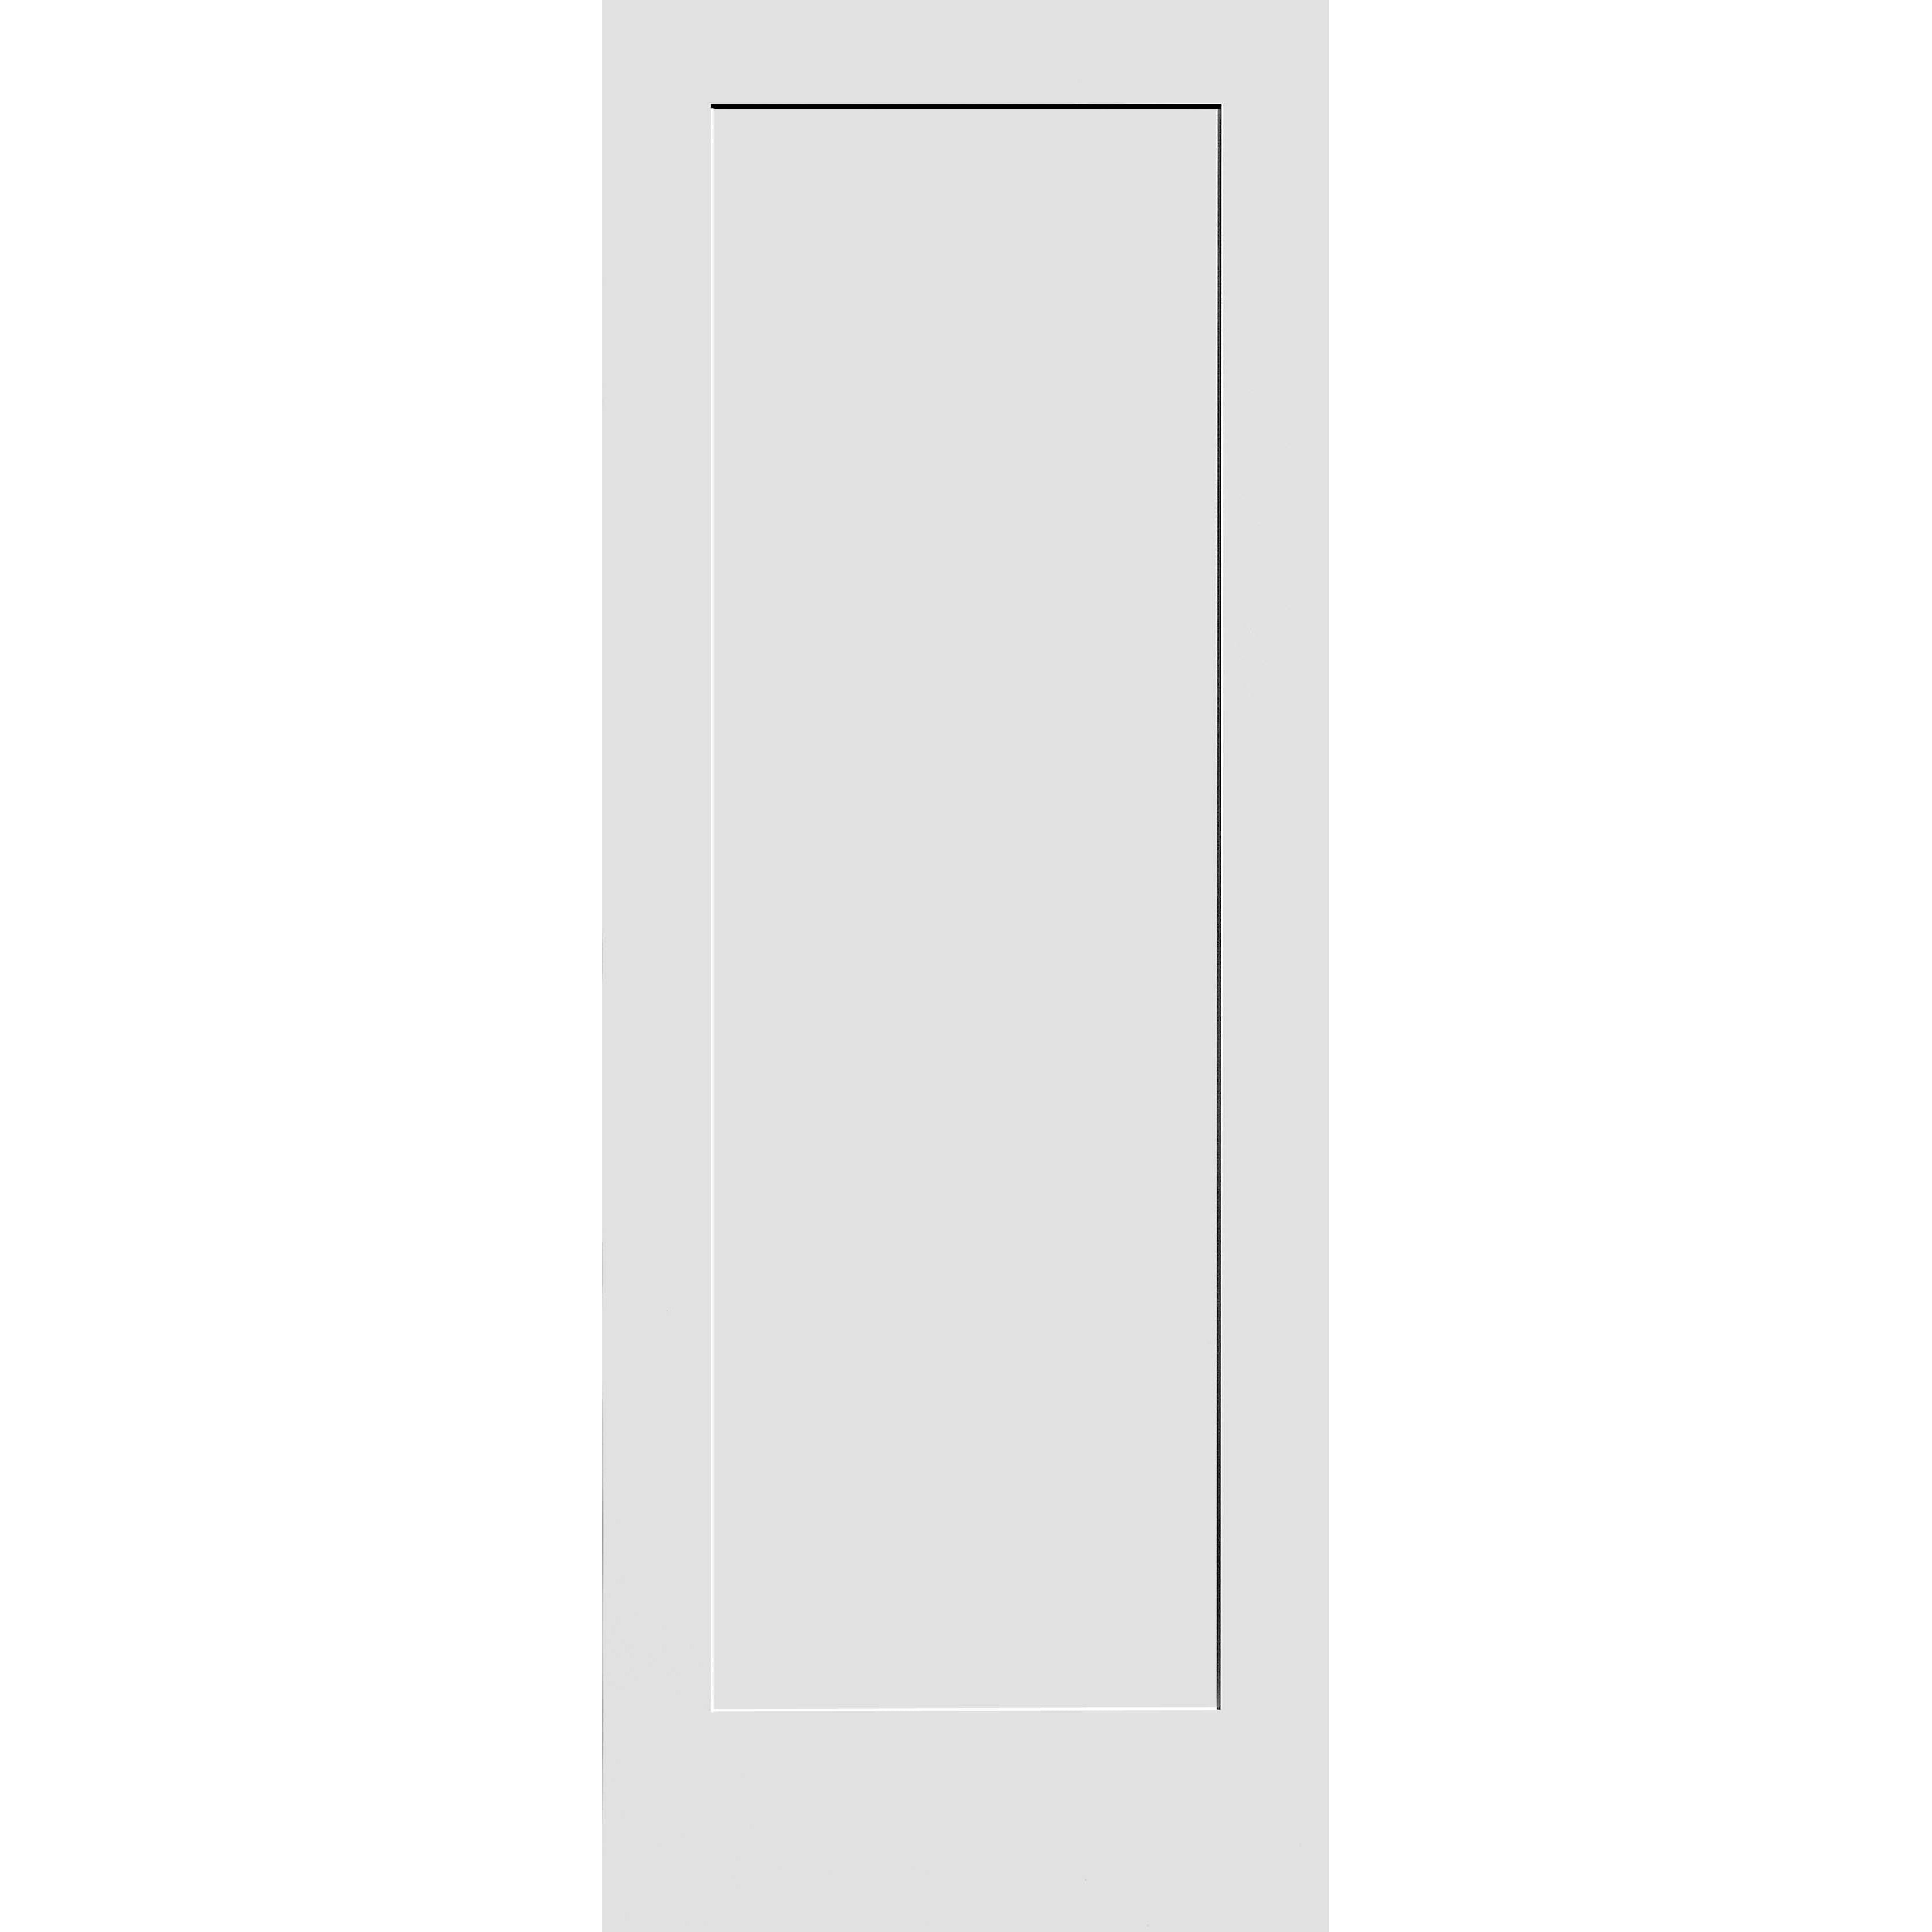 34X84 #8401 MDF PRIMED SHAKER PANEL INTERIOR DOOR 1-3/4 THICKNESS